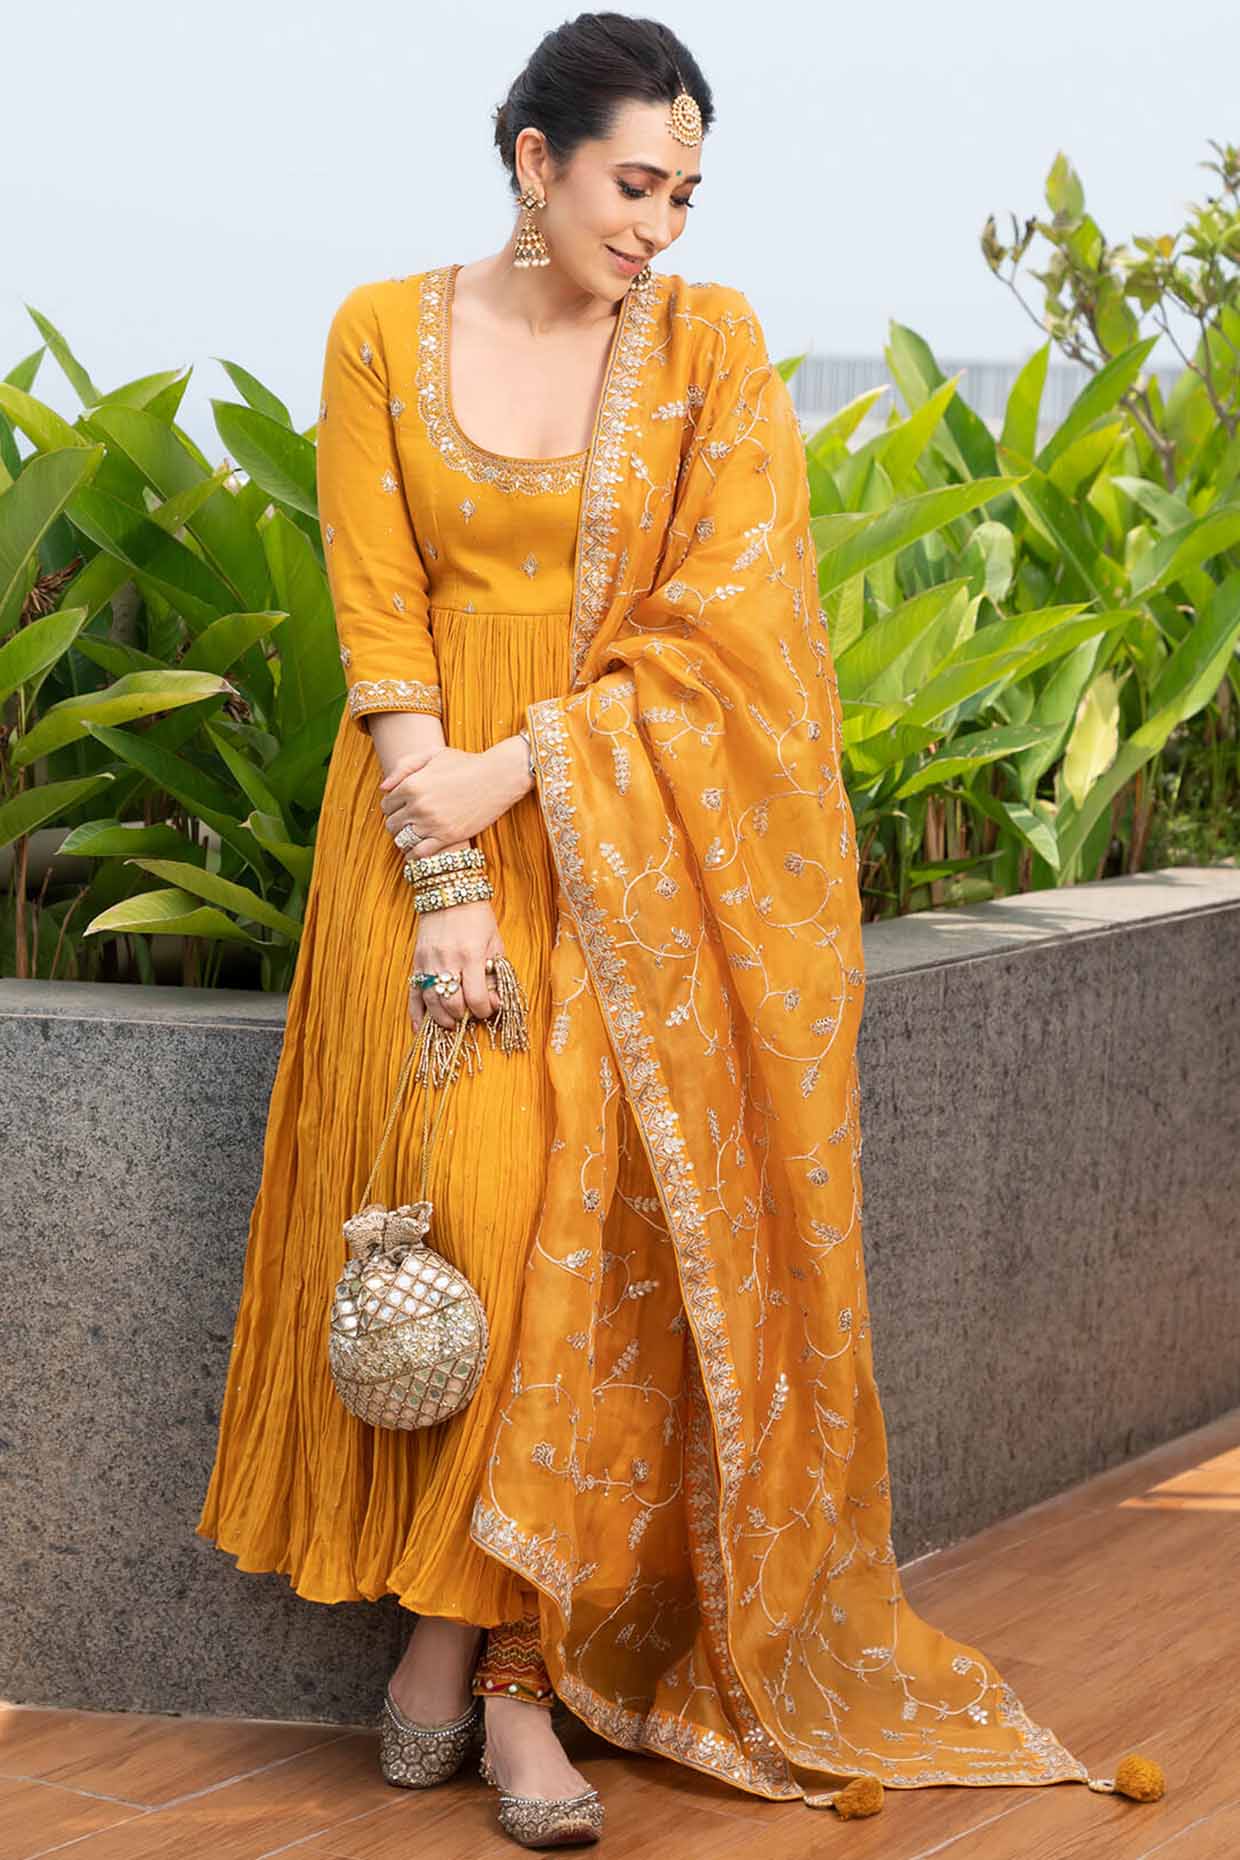 Ganga Fashions x Karisma Kapoor: Her Stunning Gul Bagh Collection Looks -  Hindustan Times